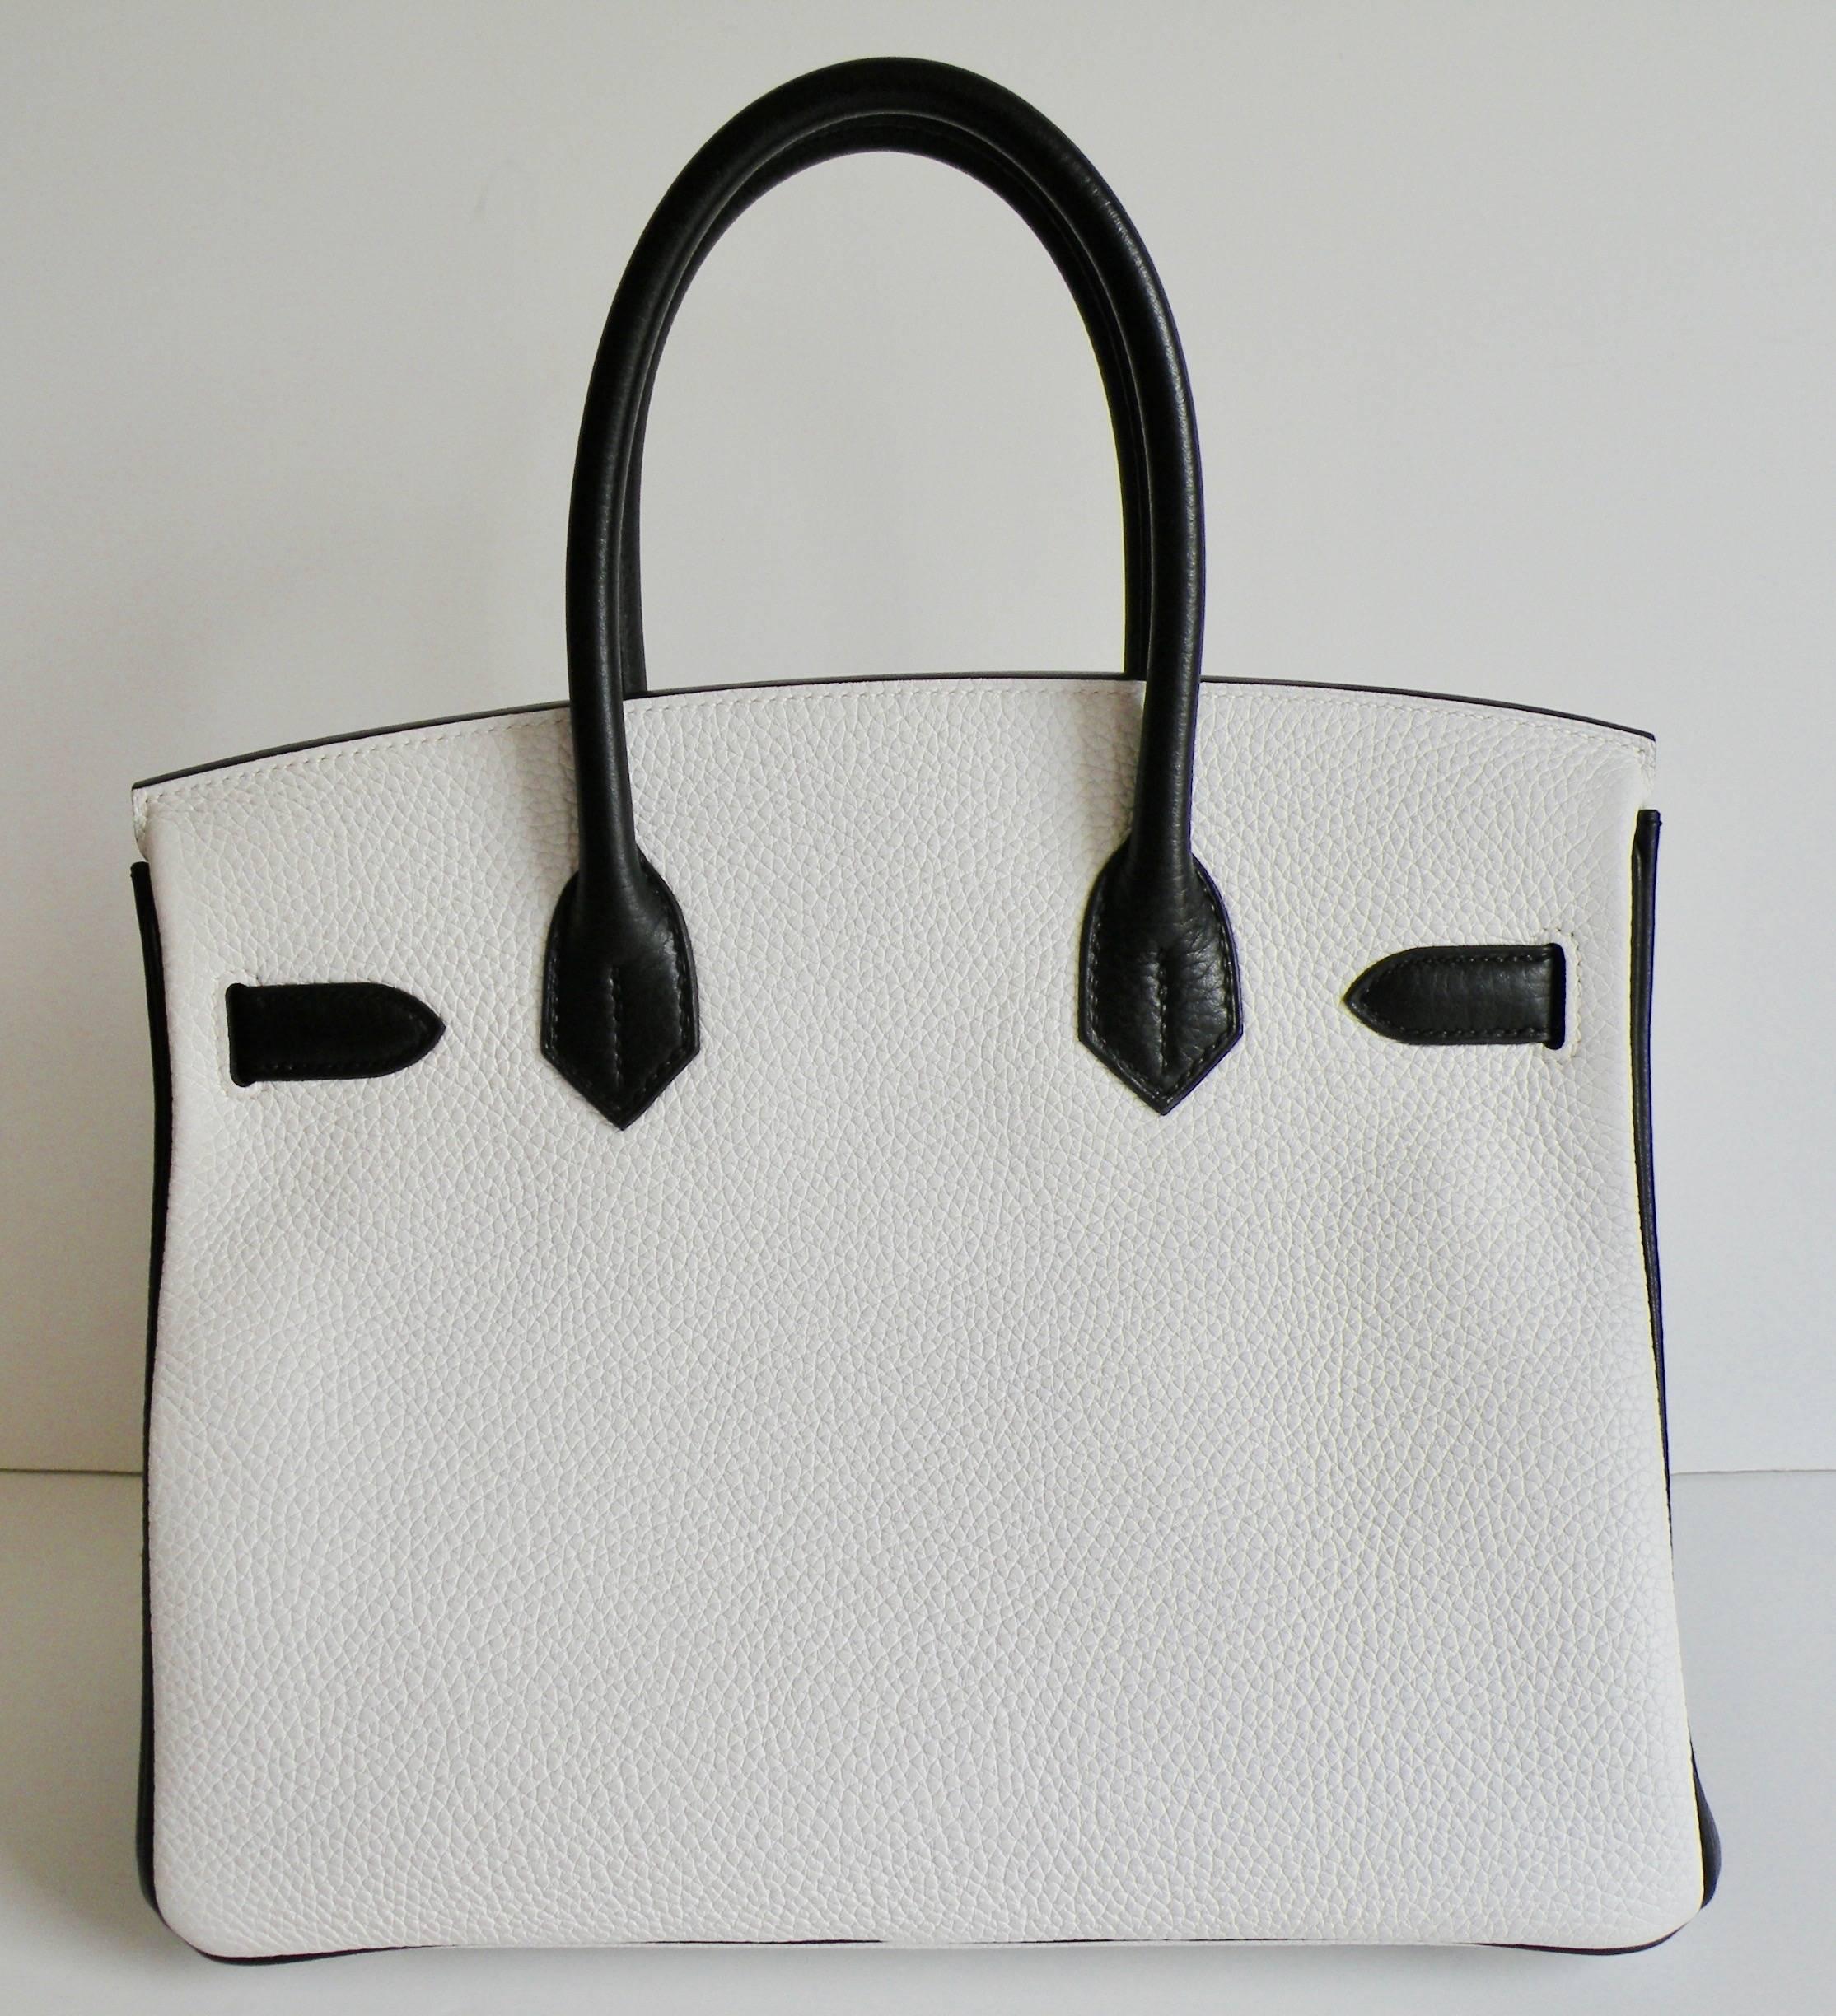 Hermes Birkin Bag 30cm Black White HSS Special Order 1